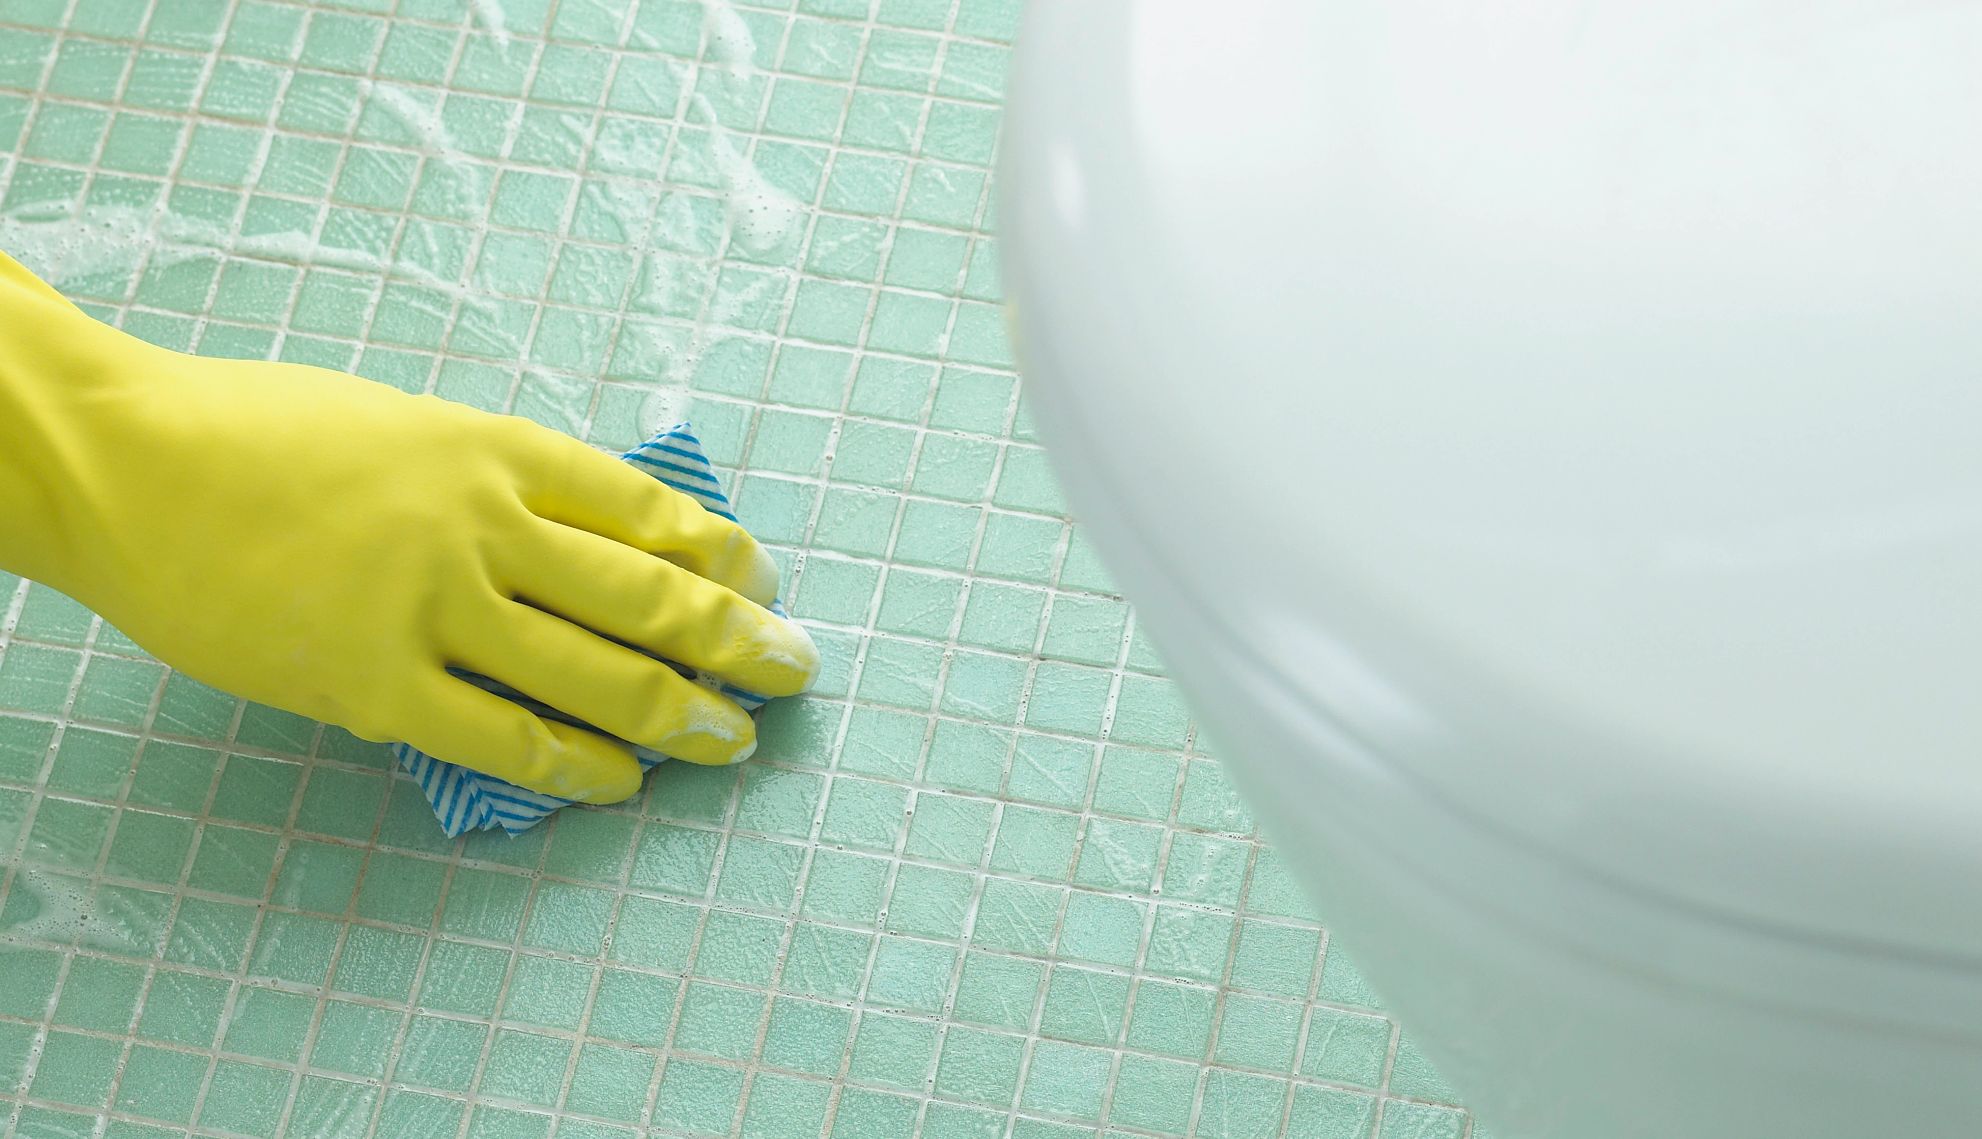 a hand cleaning a bathroom floor